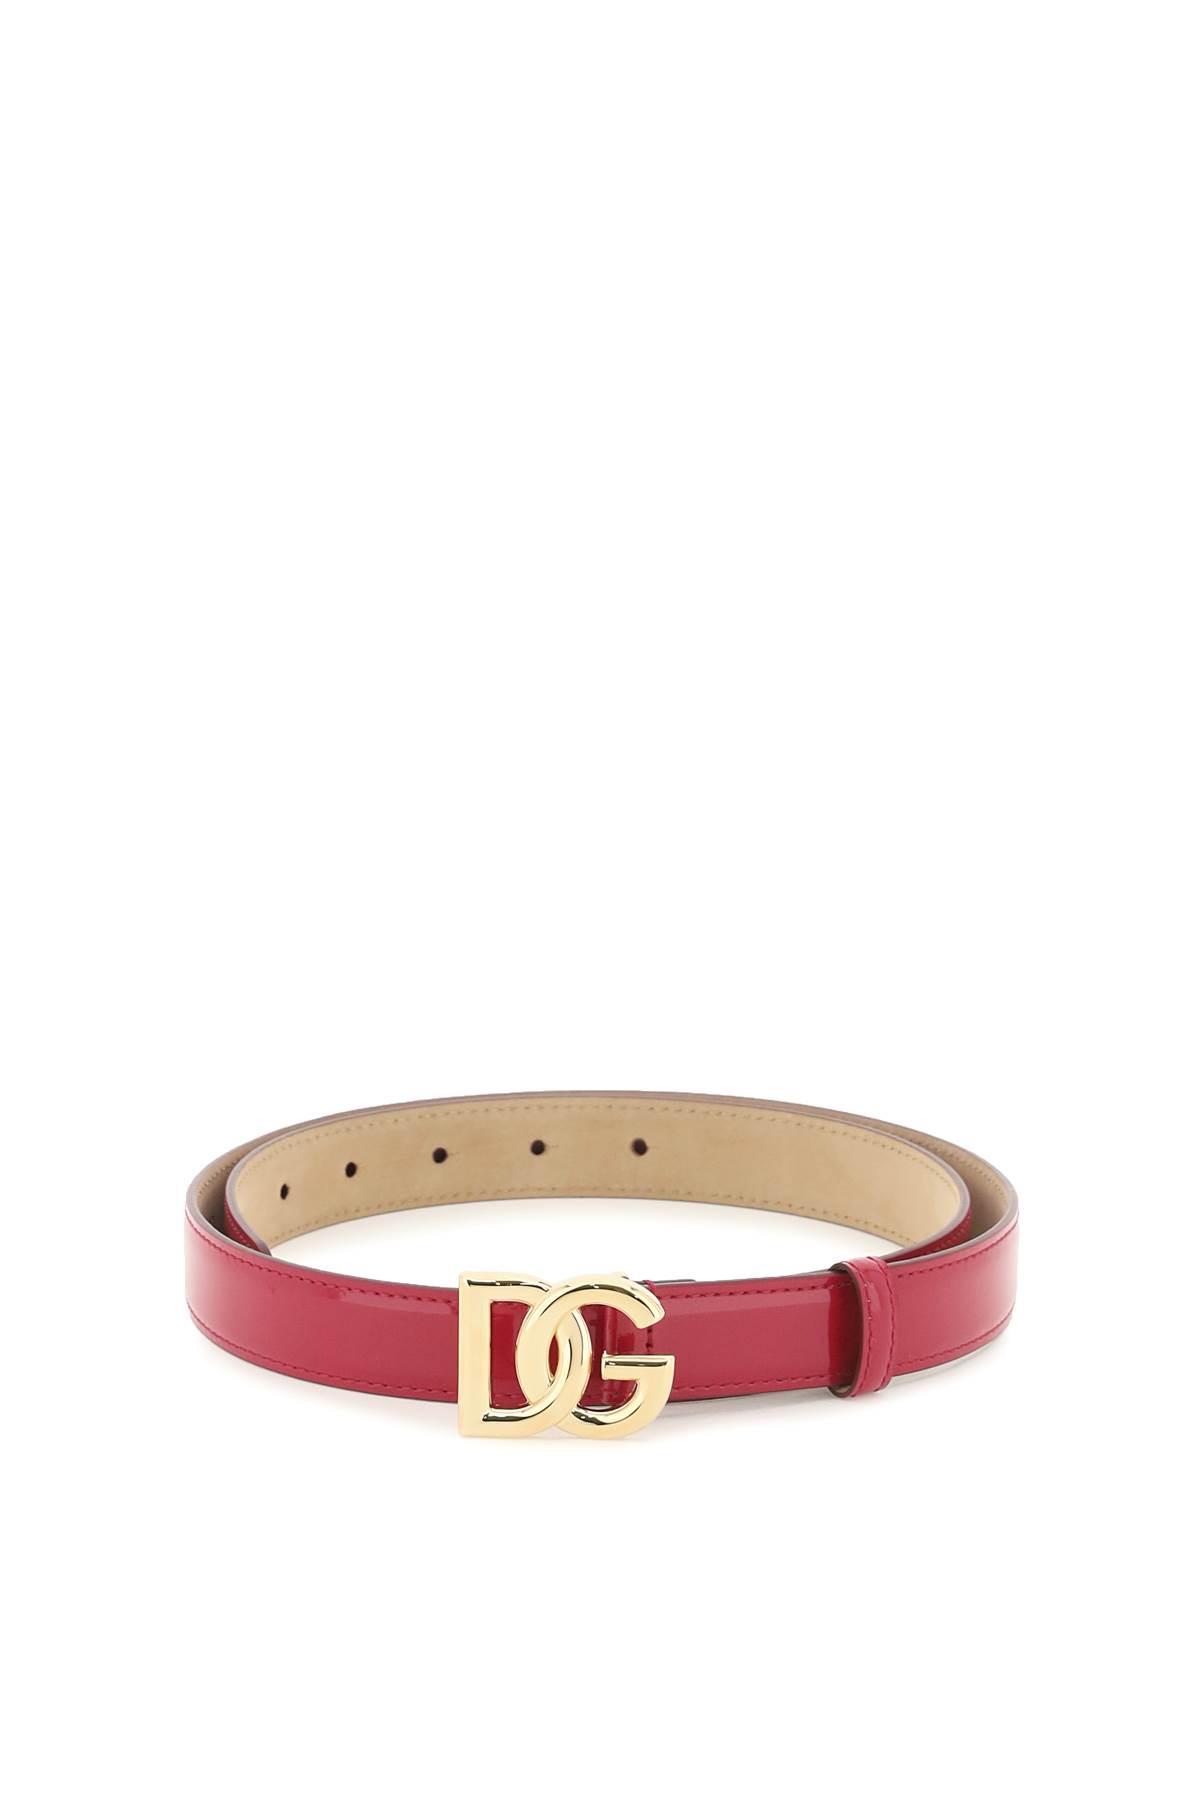 Dolce & Gabbana Belt With Logo Buckle